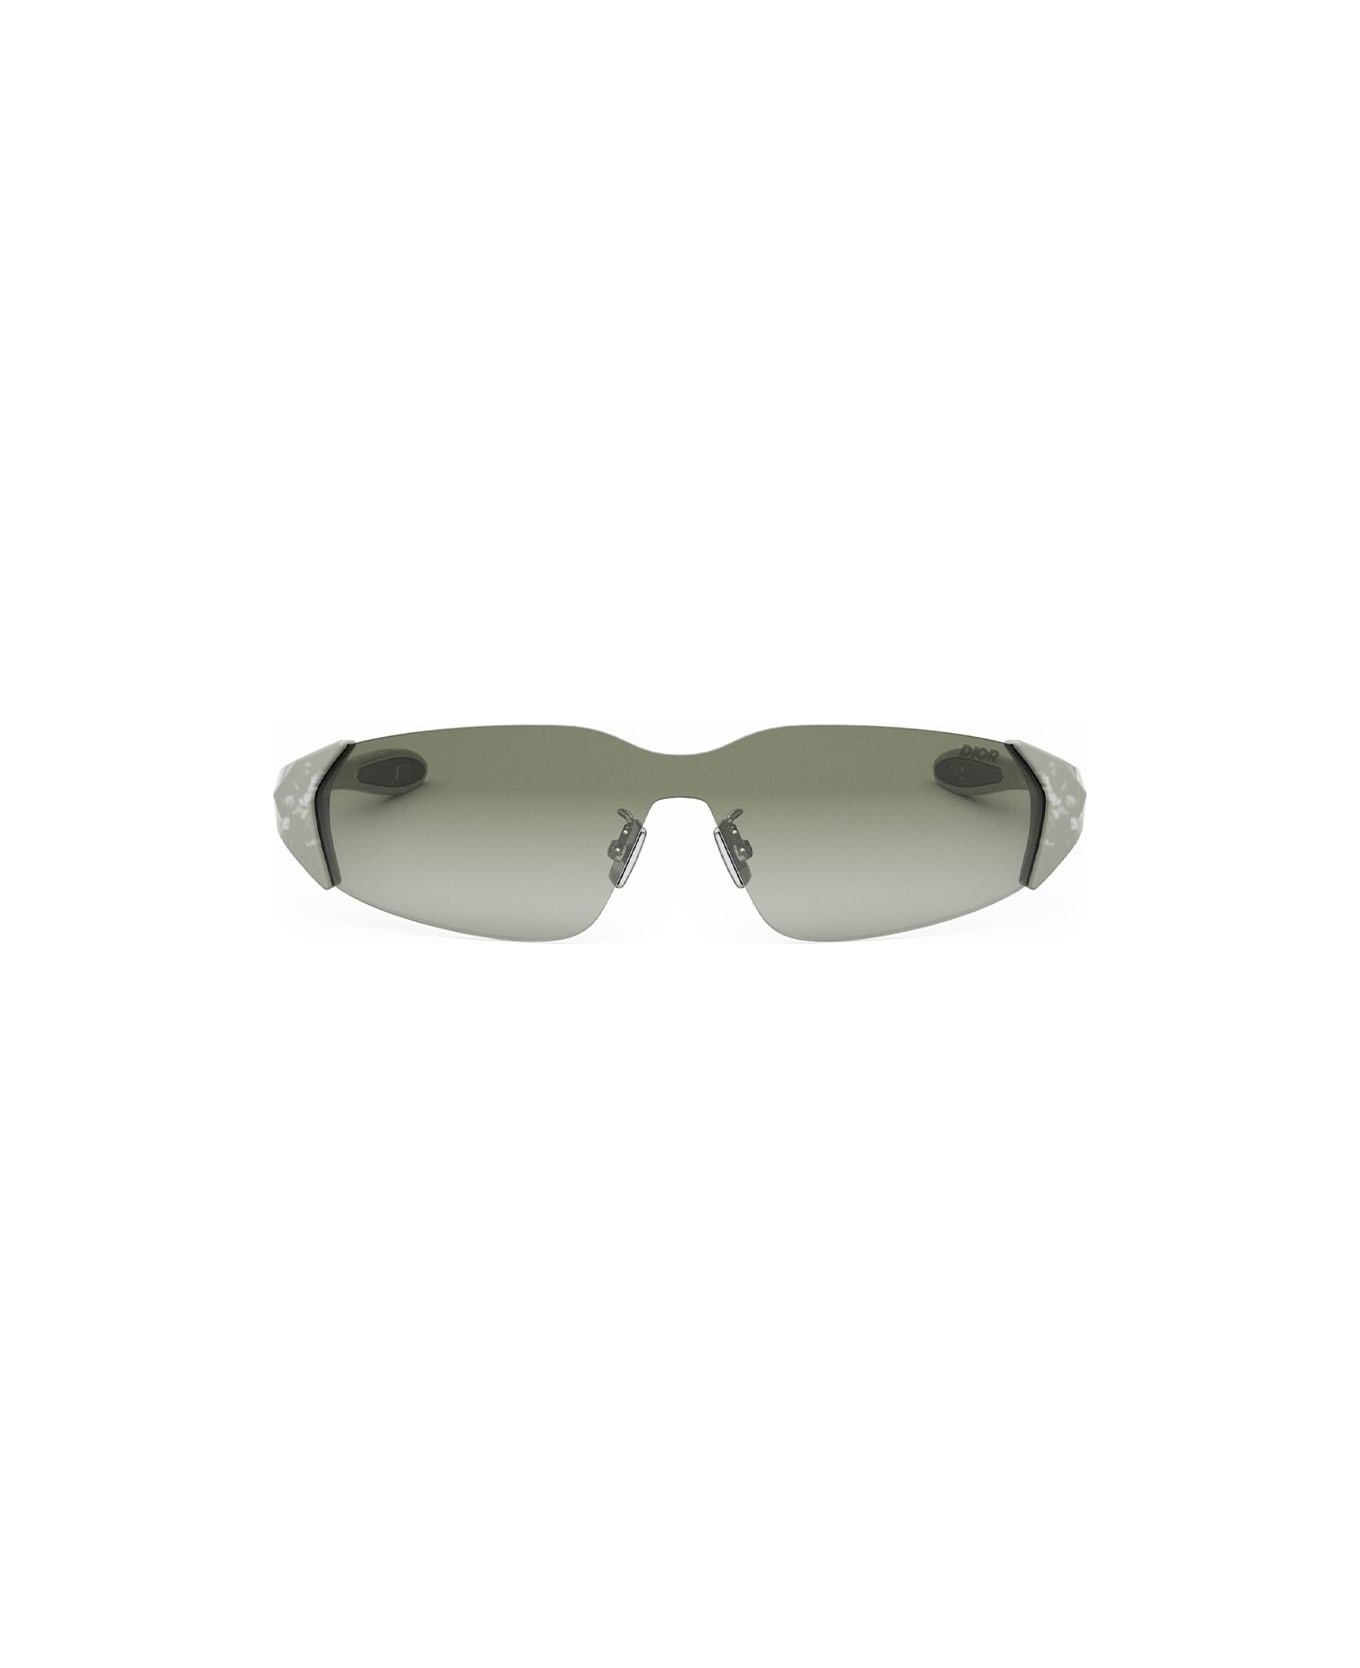 Dior Eyewear Sunglasses - Salvia/Verde sfumato